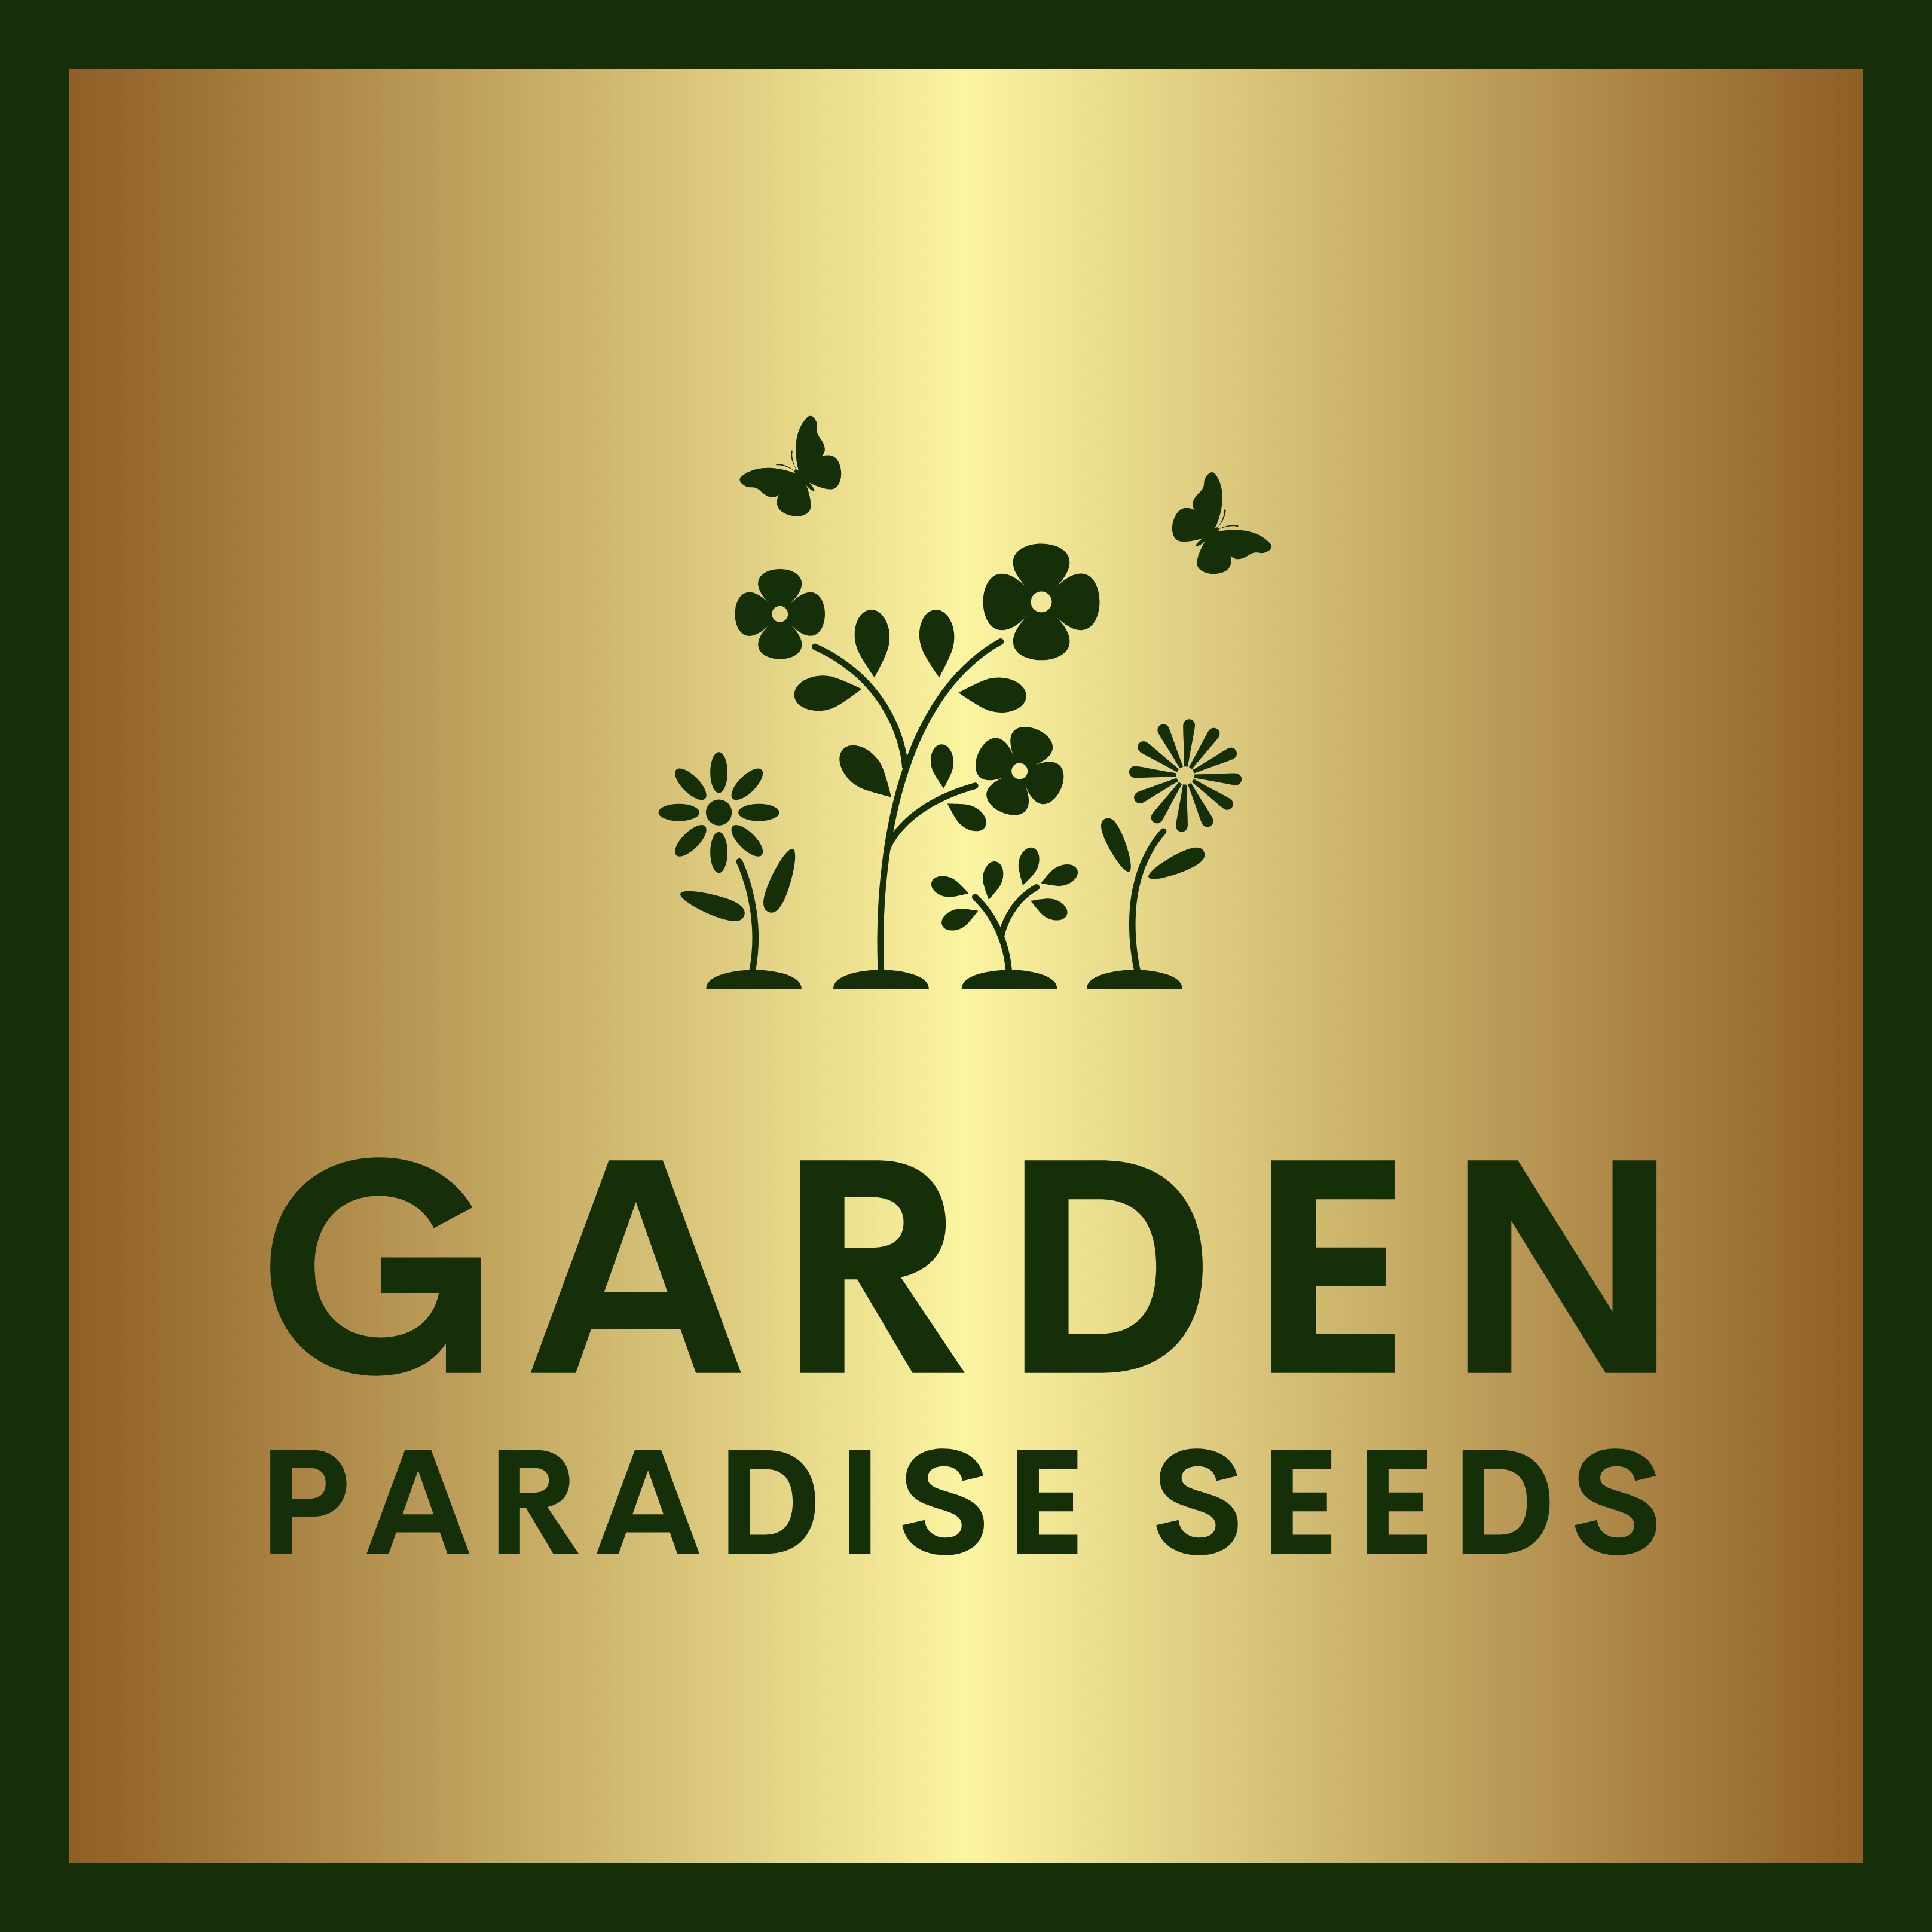 GARDEN PARADISE SEEDS THE PLANT SHOP